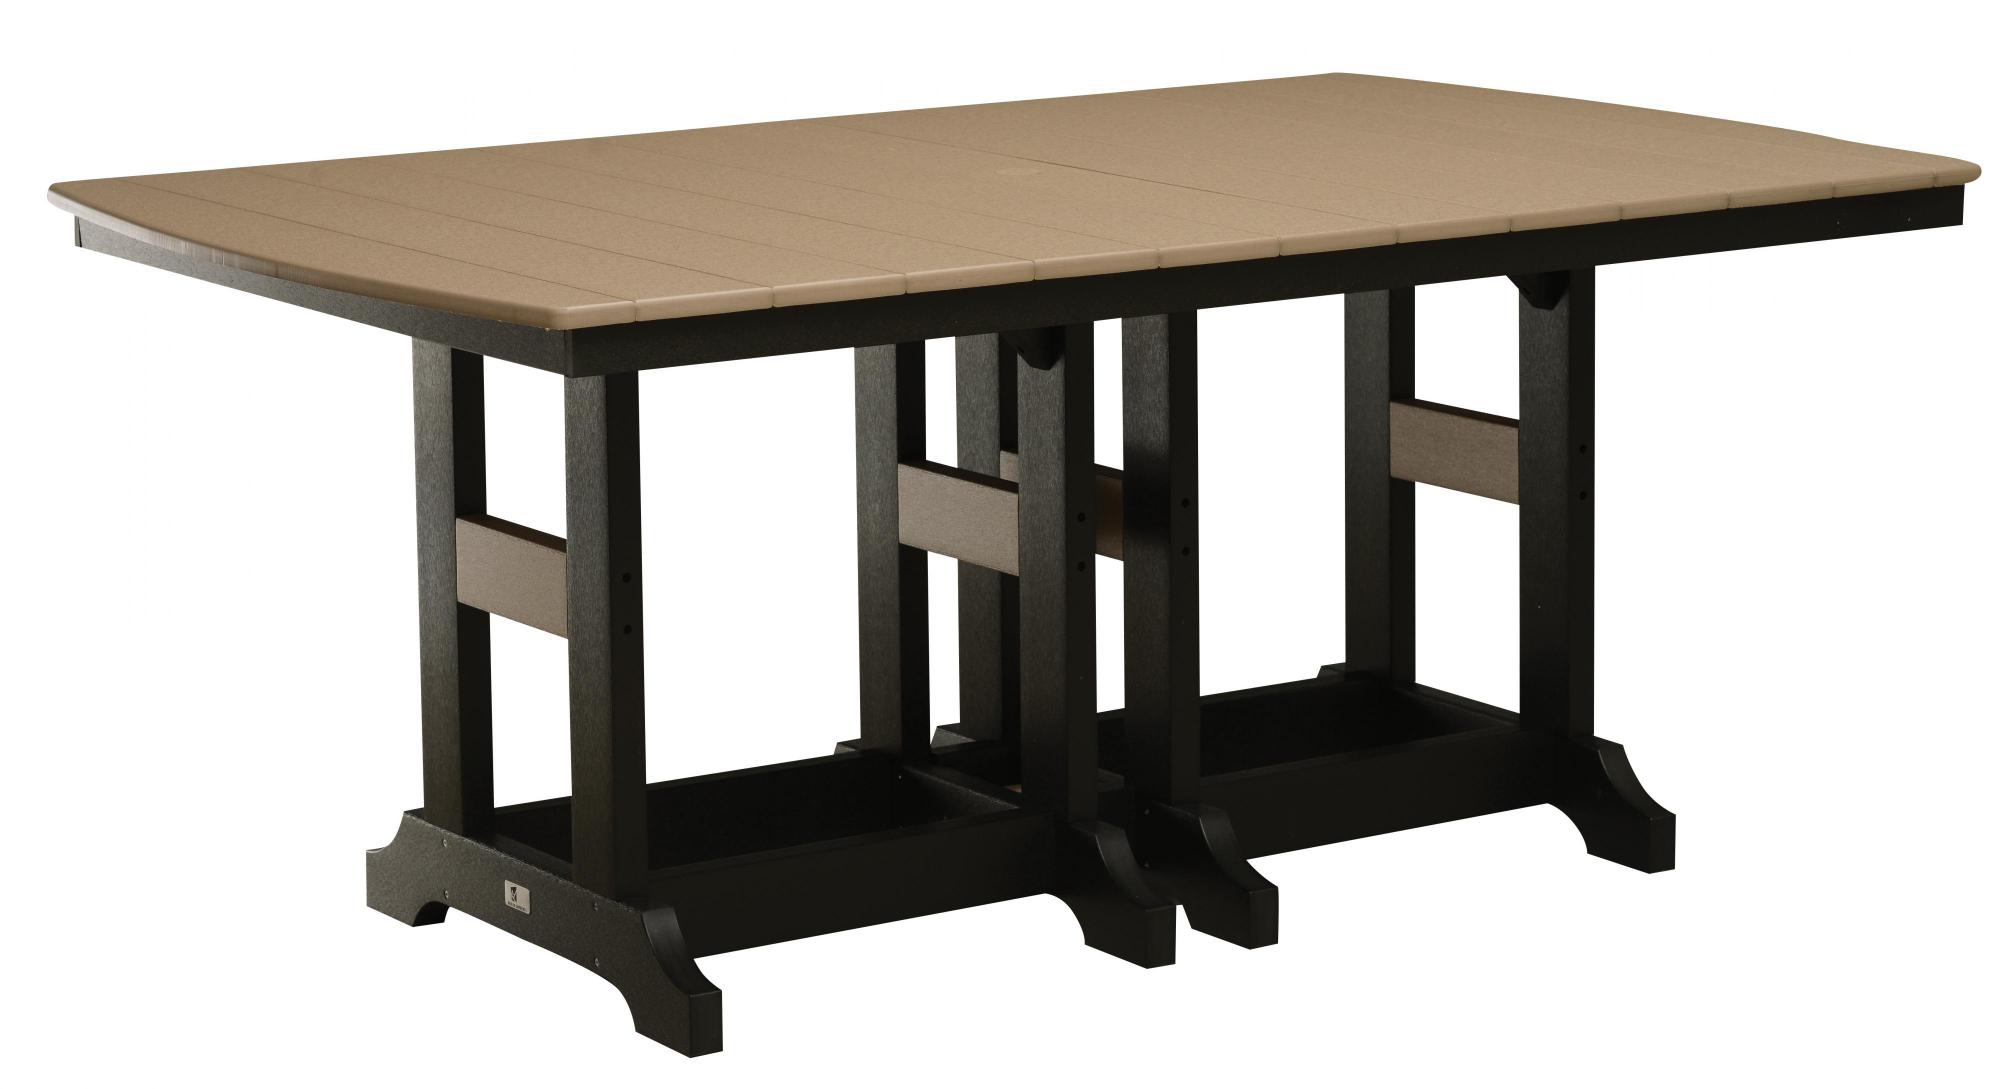 44" x 72" Rectangular Table